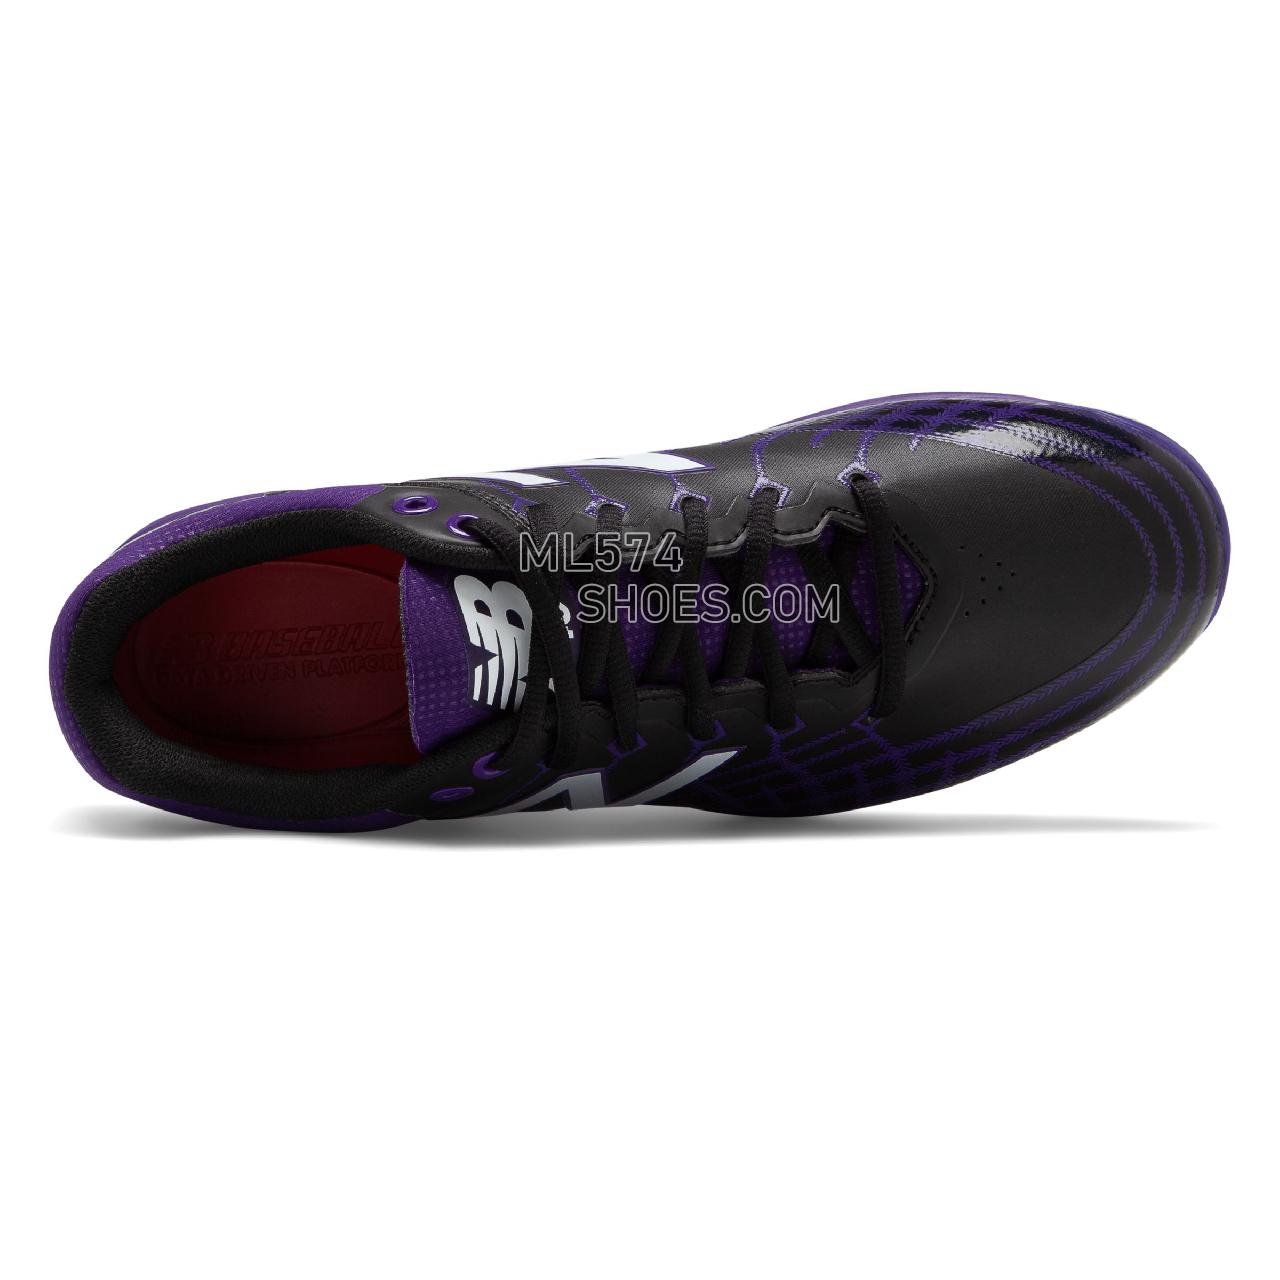 New Balance 4040v5 TPU - Men's Baseball Turf - Black with Purple - PL4040P5